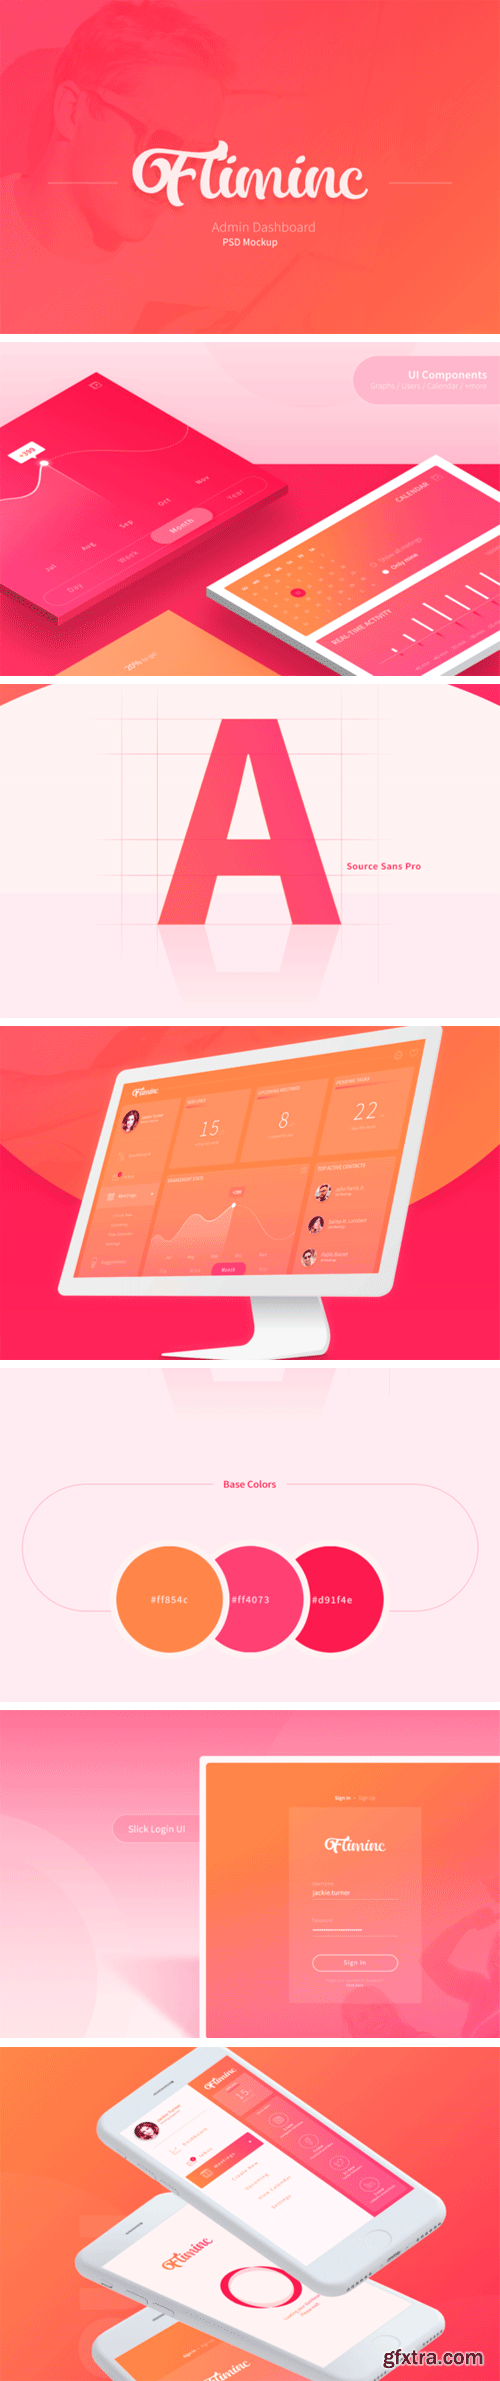 Creativefabrica - Fliminc UI Kit Admin Dashboard